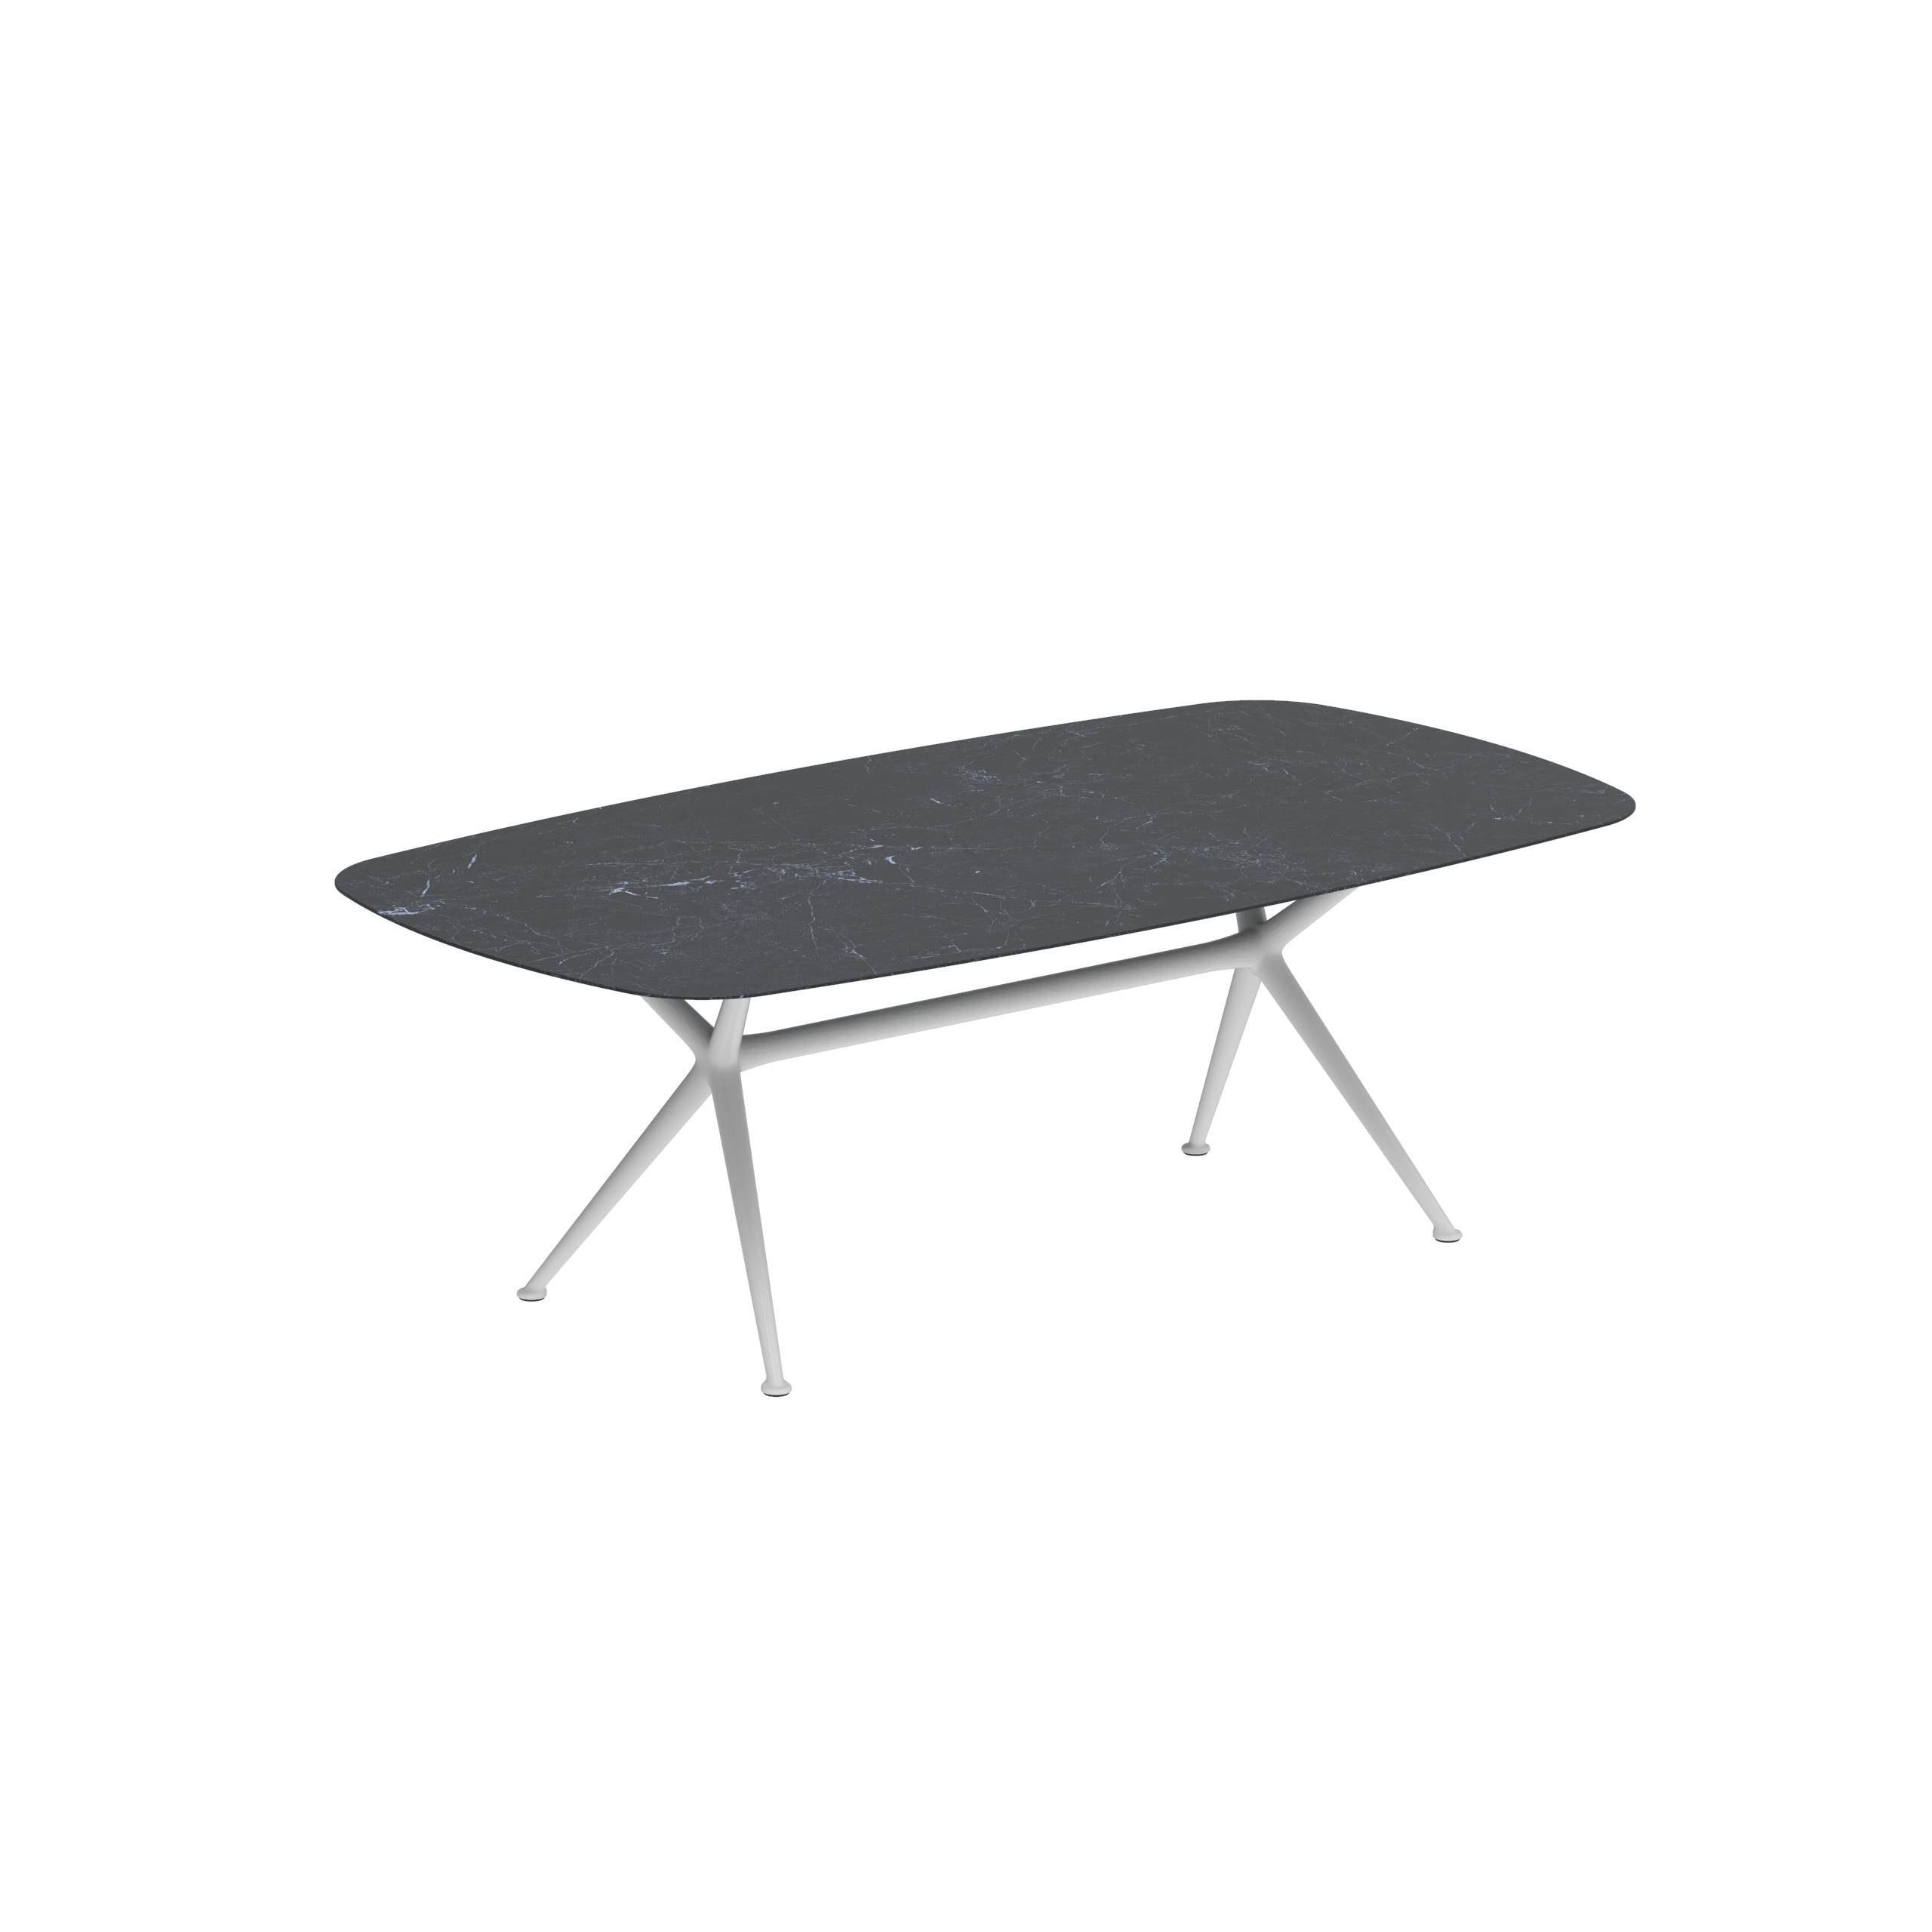 Exes Table 220x120cm Alu Legs White - Table Top Ceramic Nero Marquina